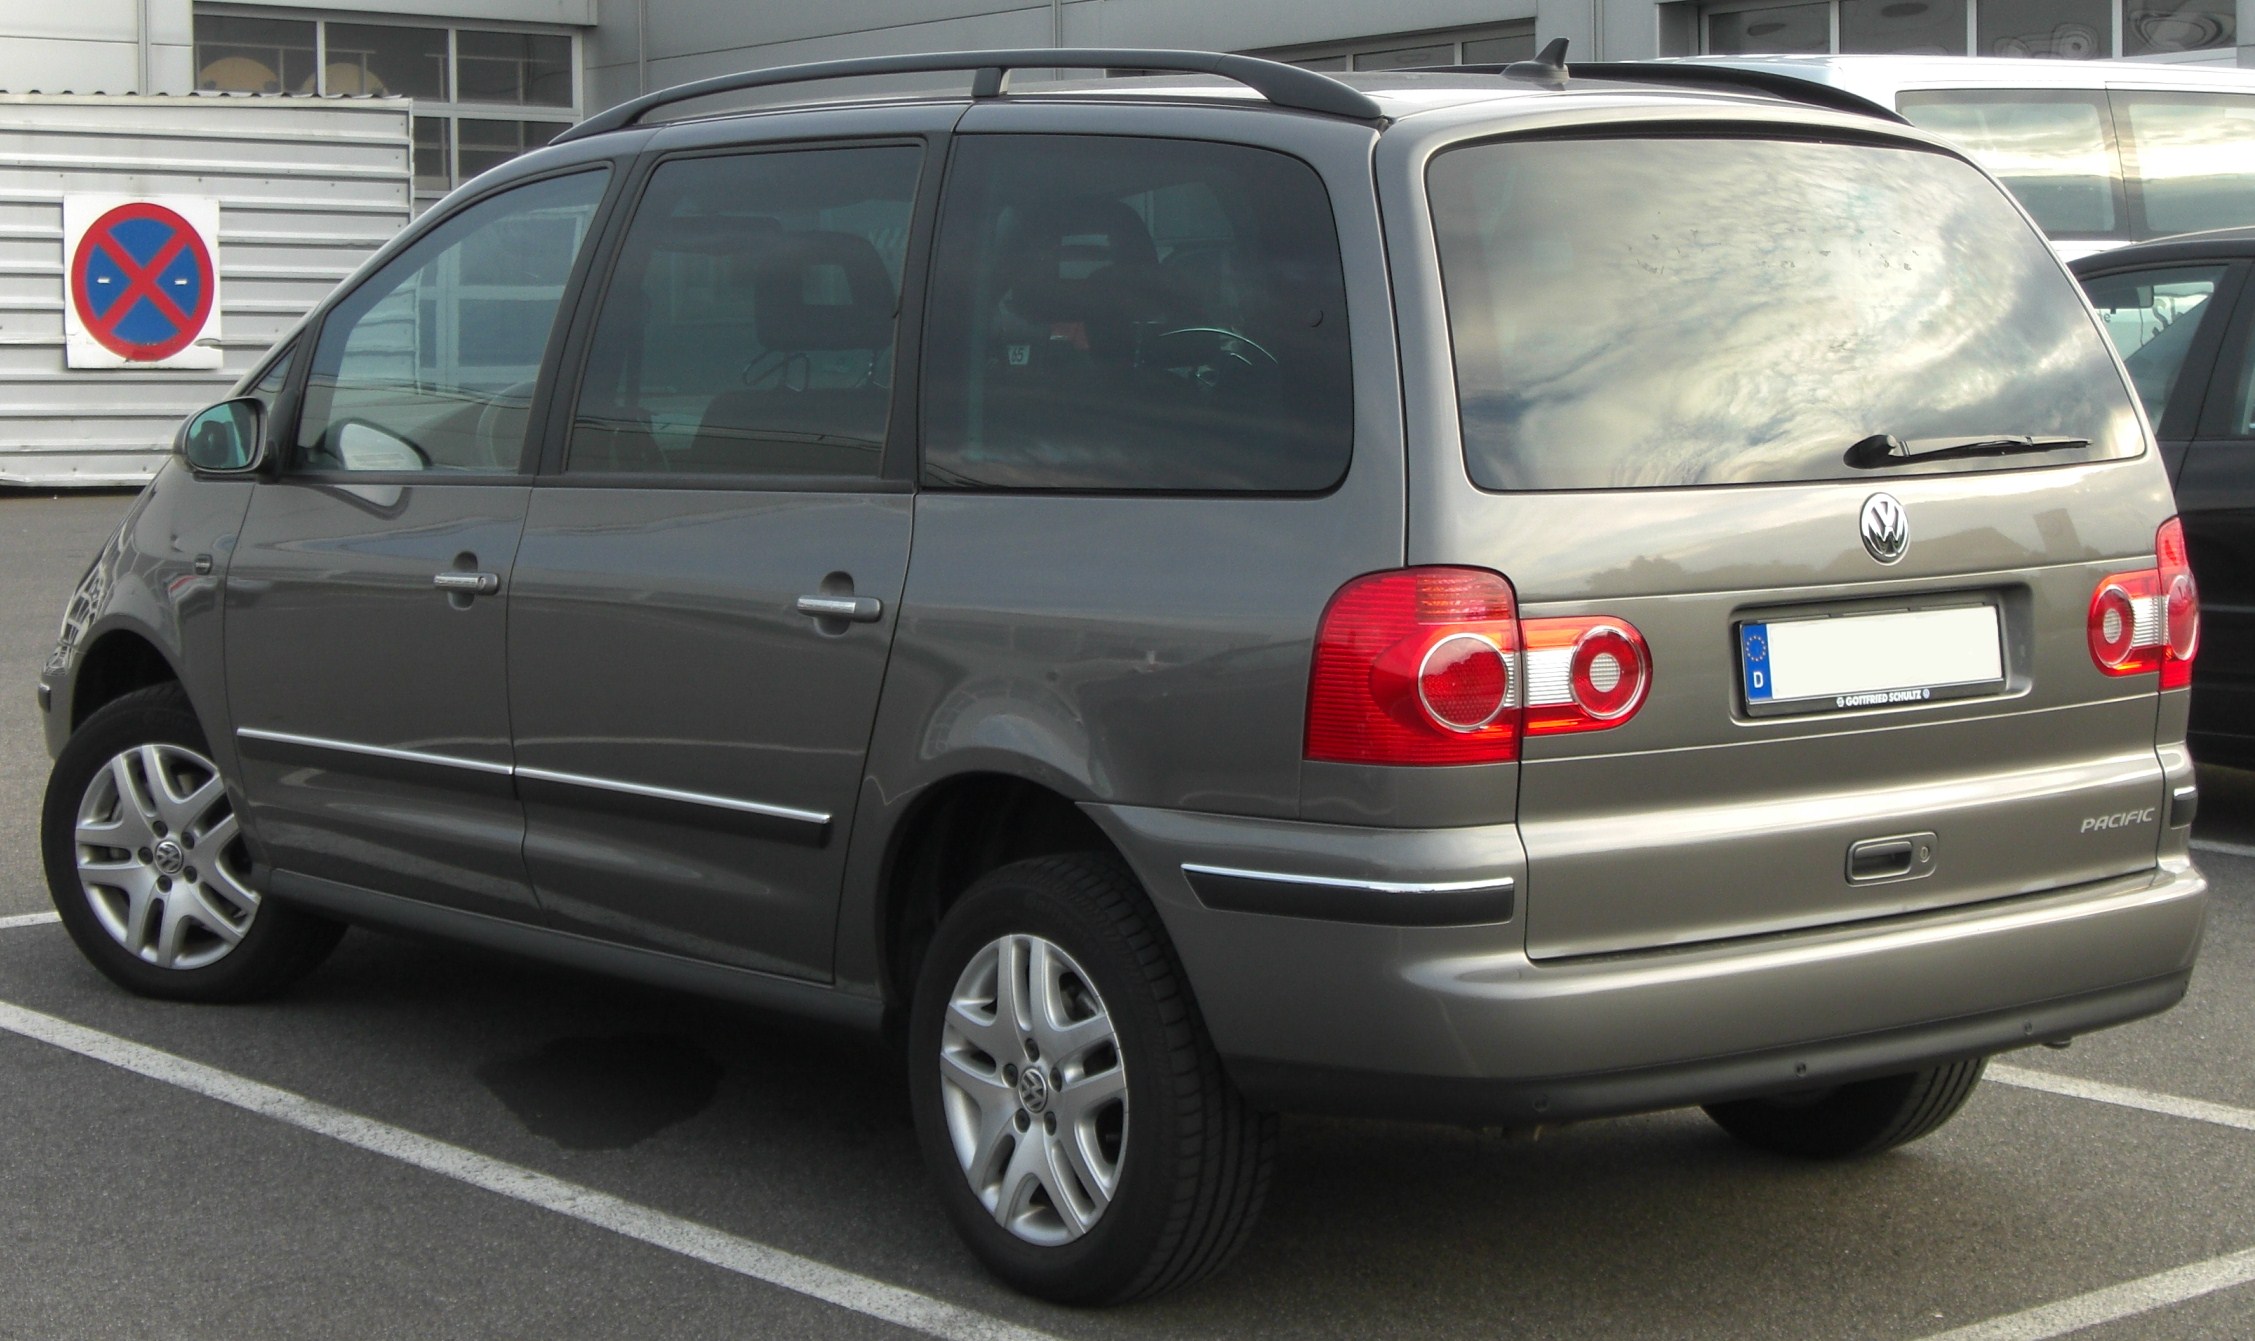 Volkswagen Sharan 2004